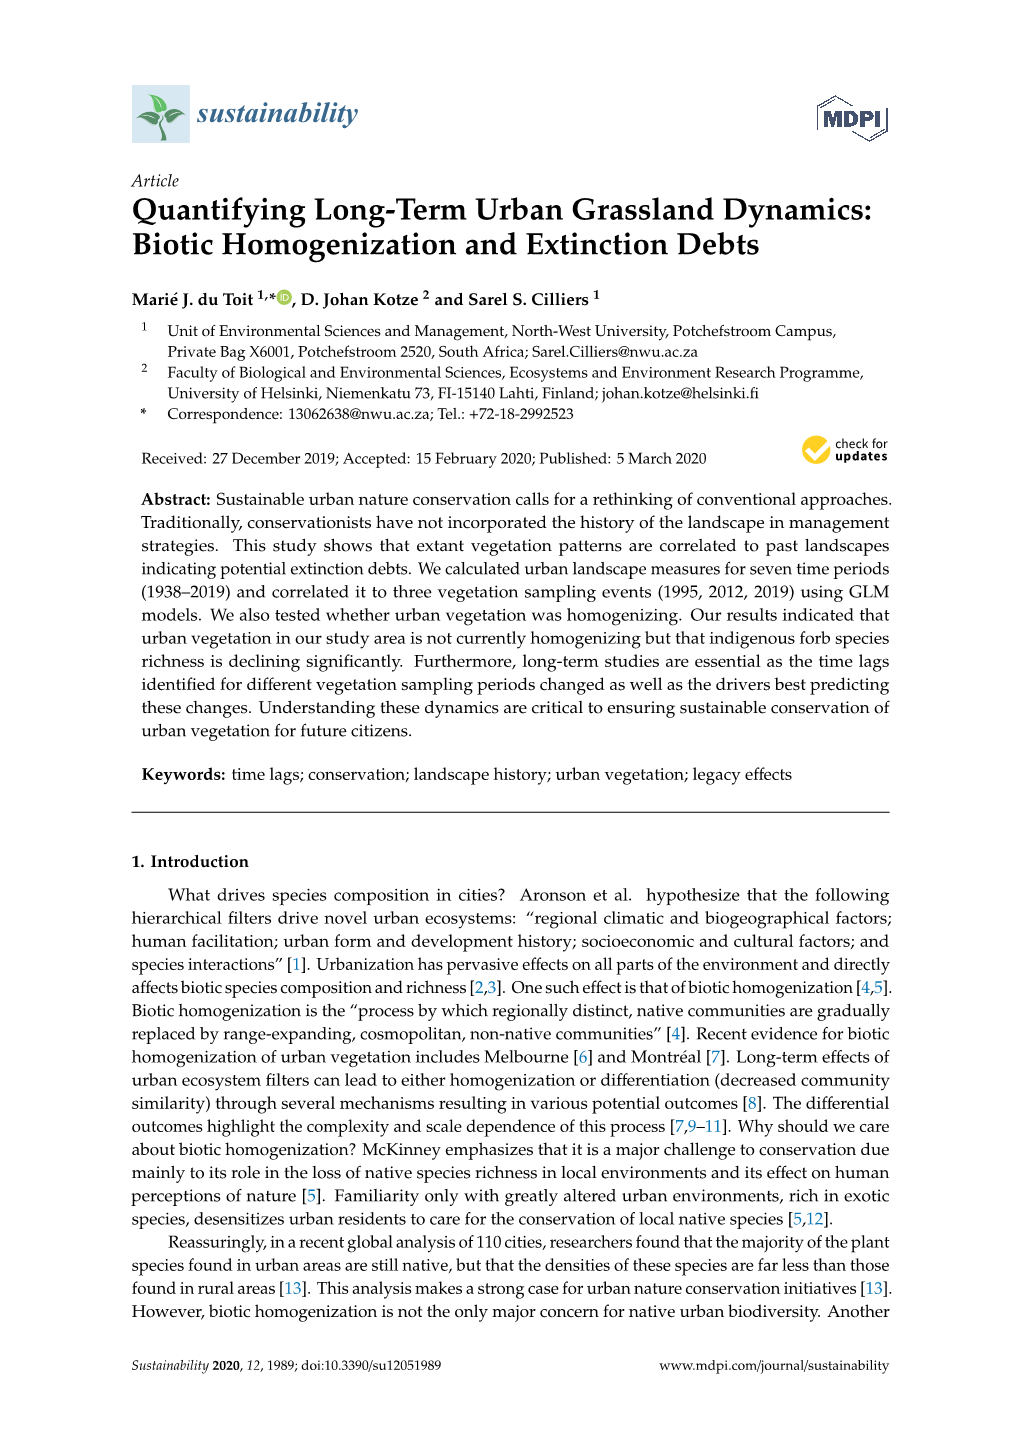 Biotic Homogenization and Extinction Debts